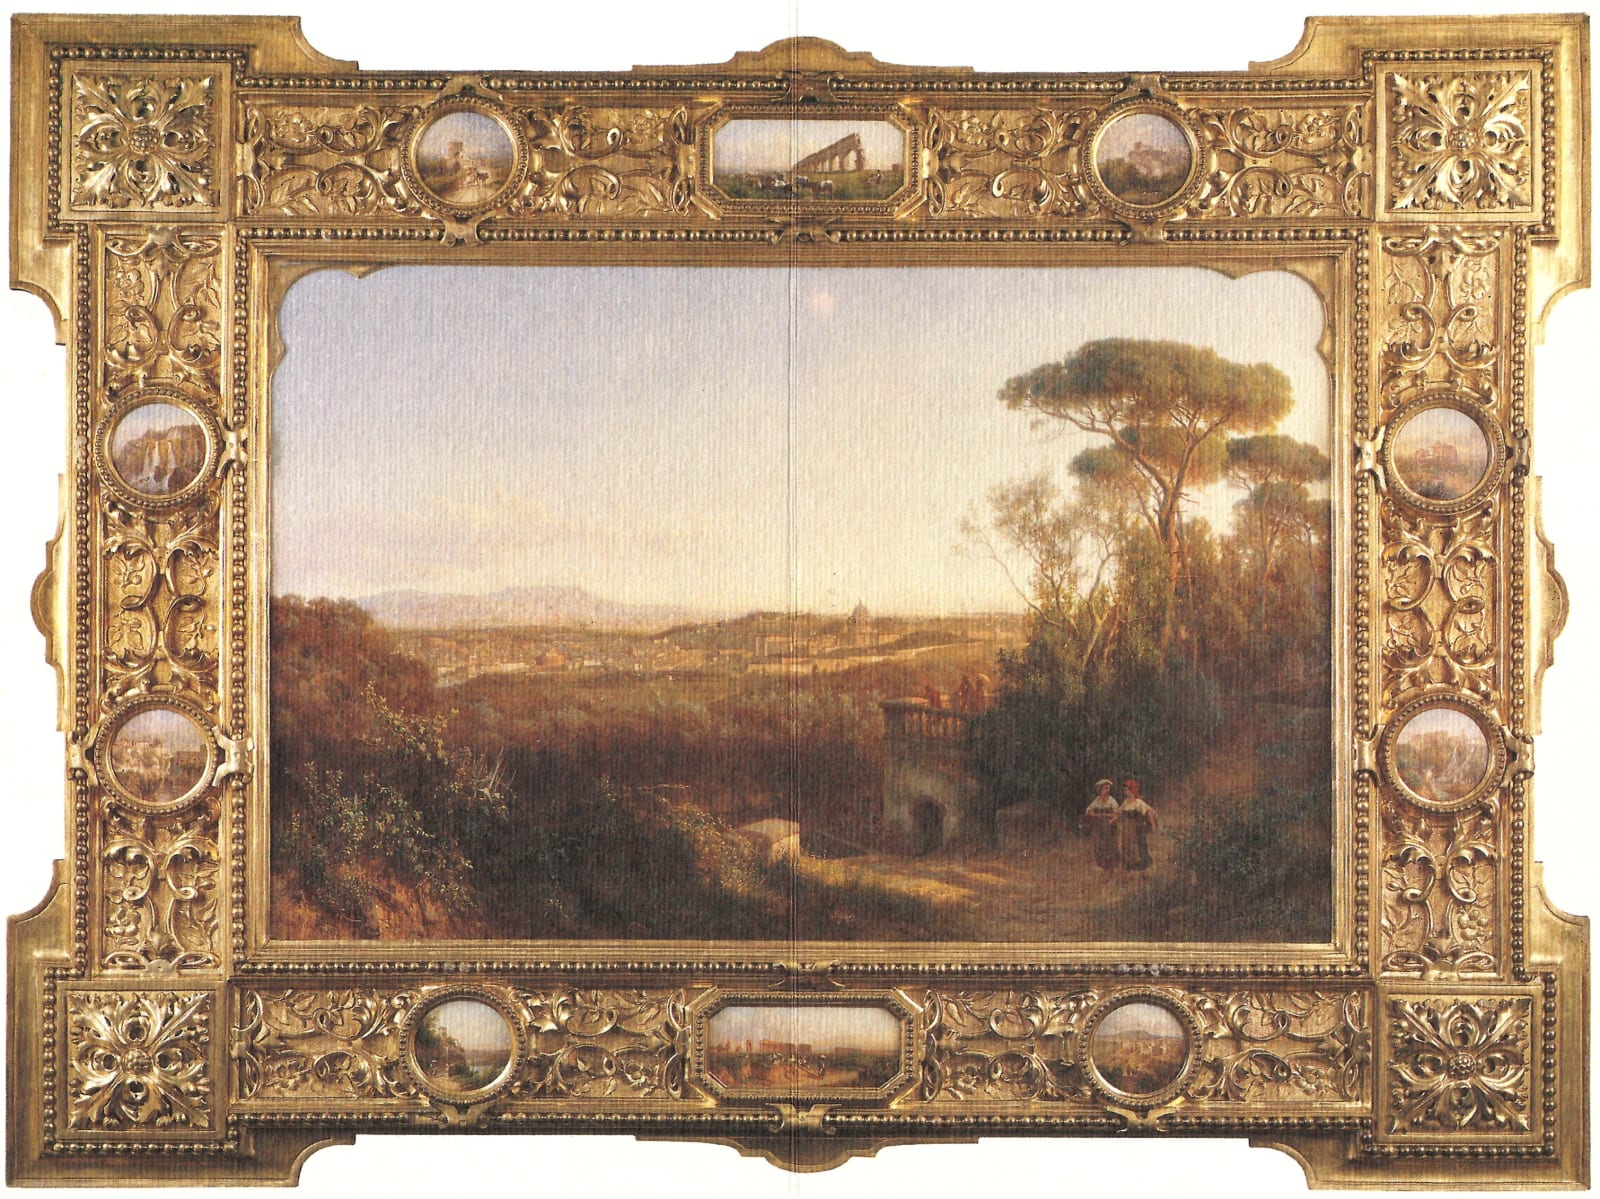 Andrea MARKO' , View of Rome from Monte Mario, 1881